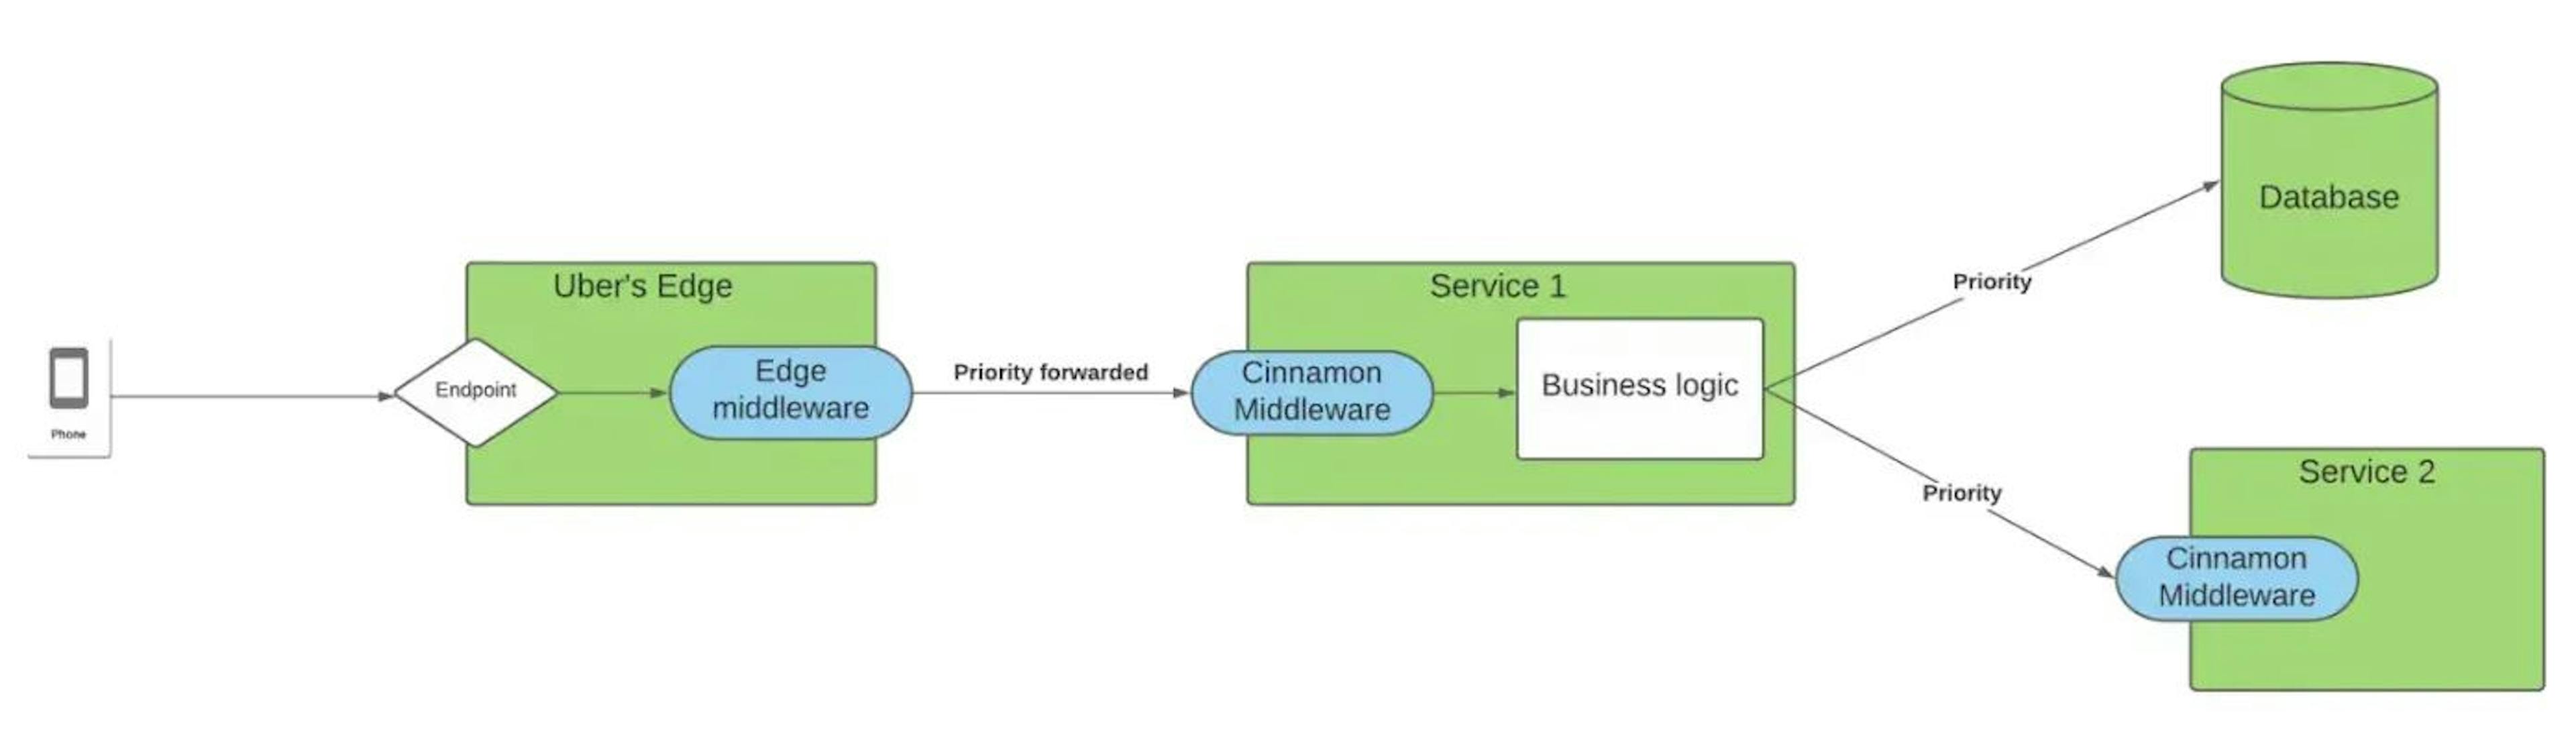 Cinnamon 如何融入 Uber 服务网格的图表。 （来自前面提到的 Uber 文章）。